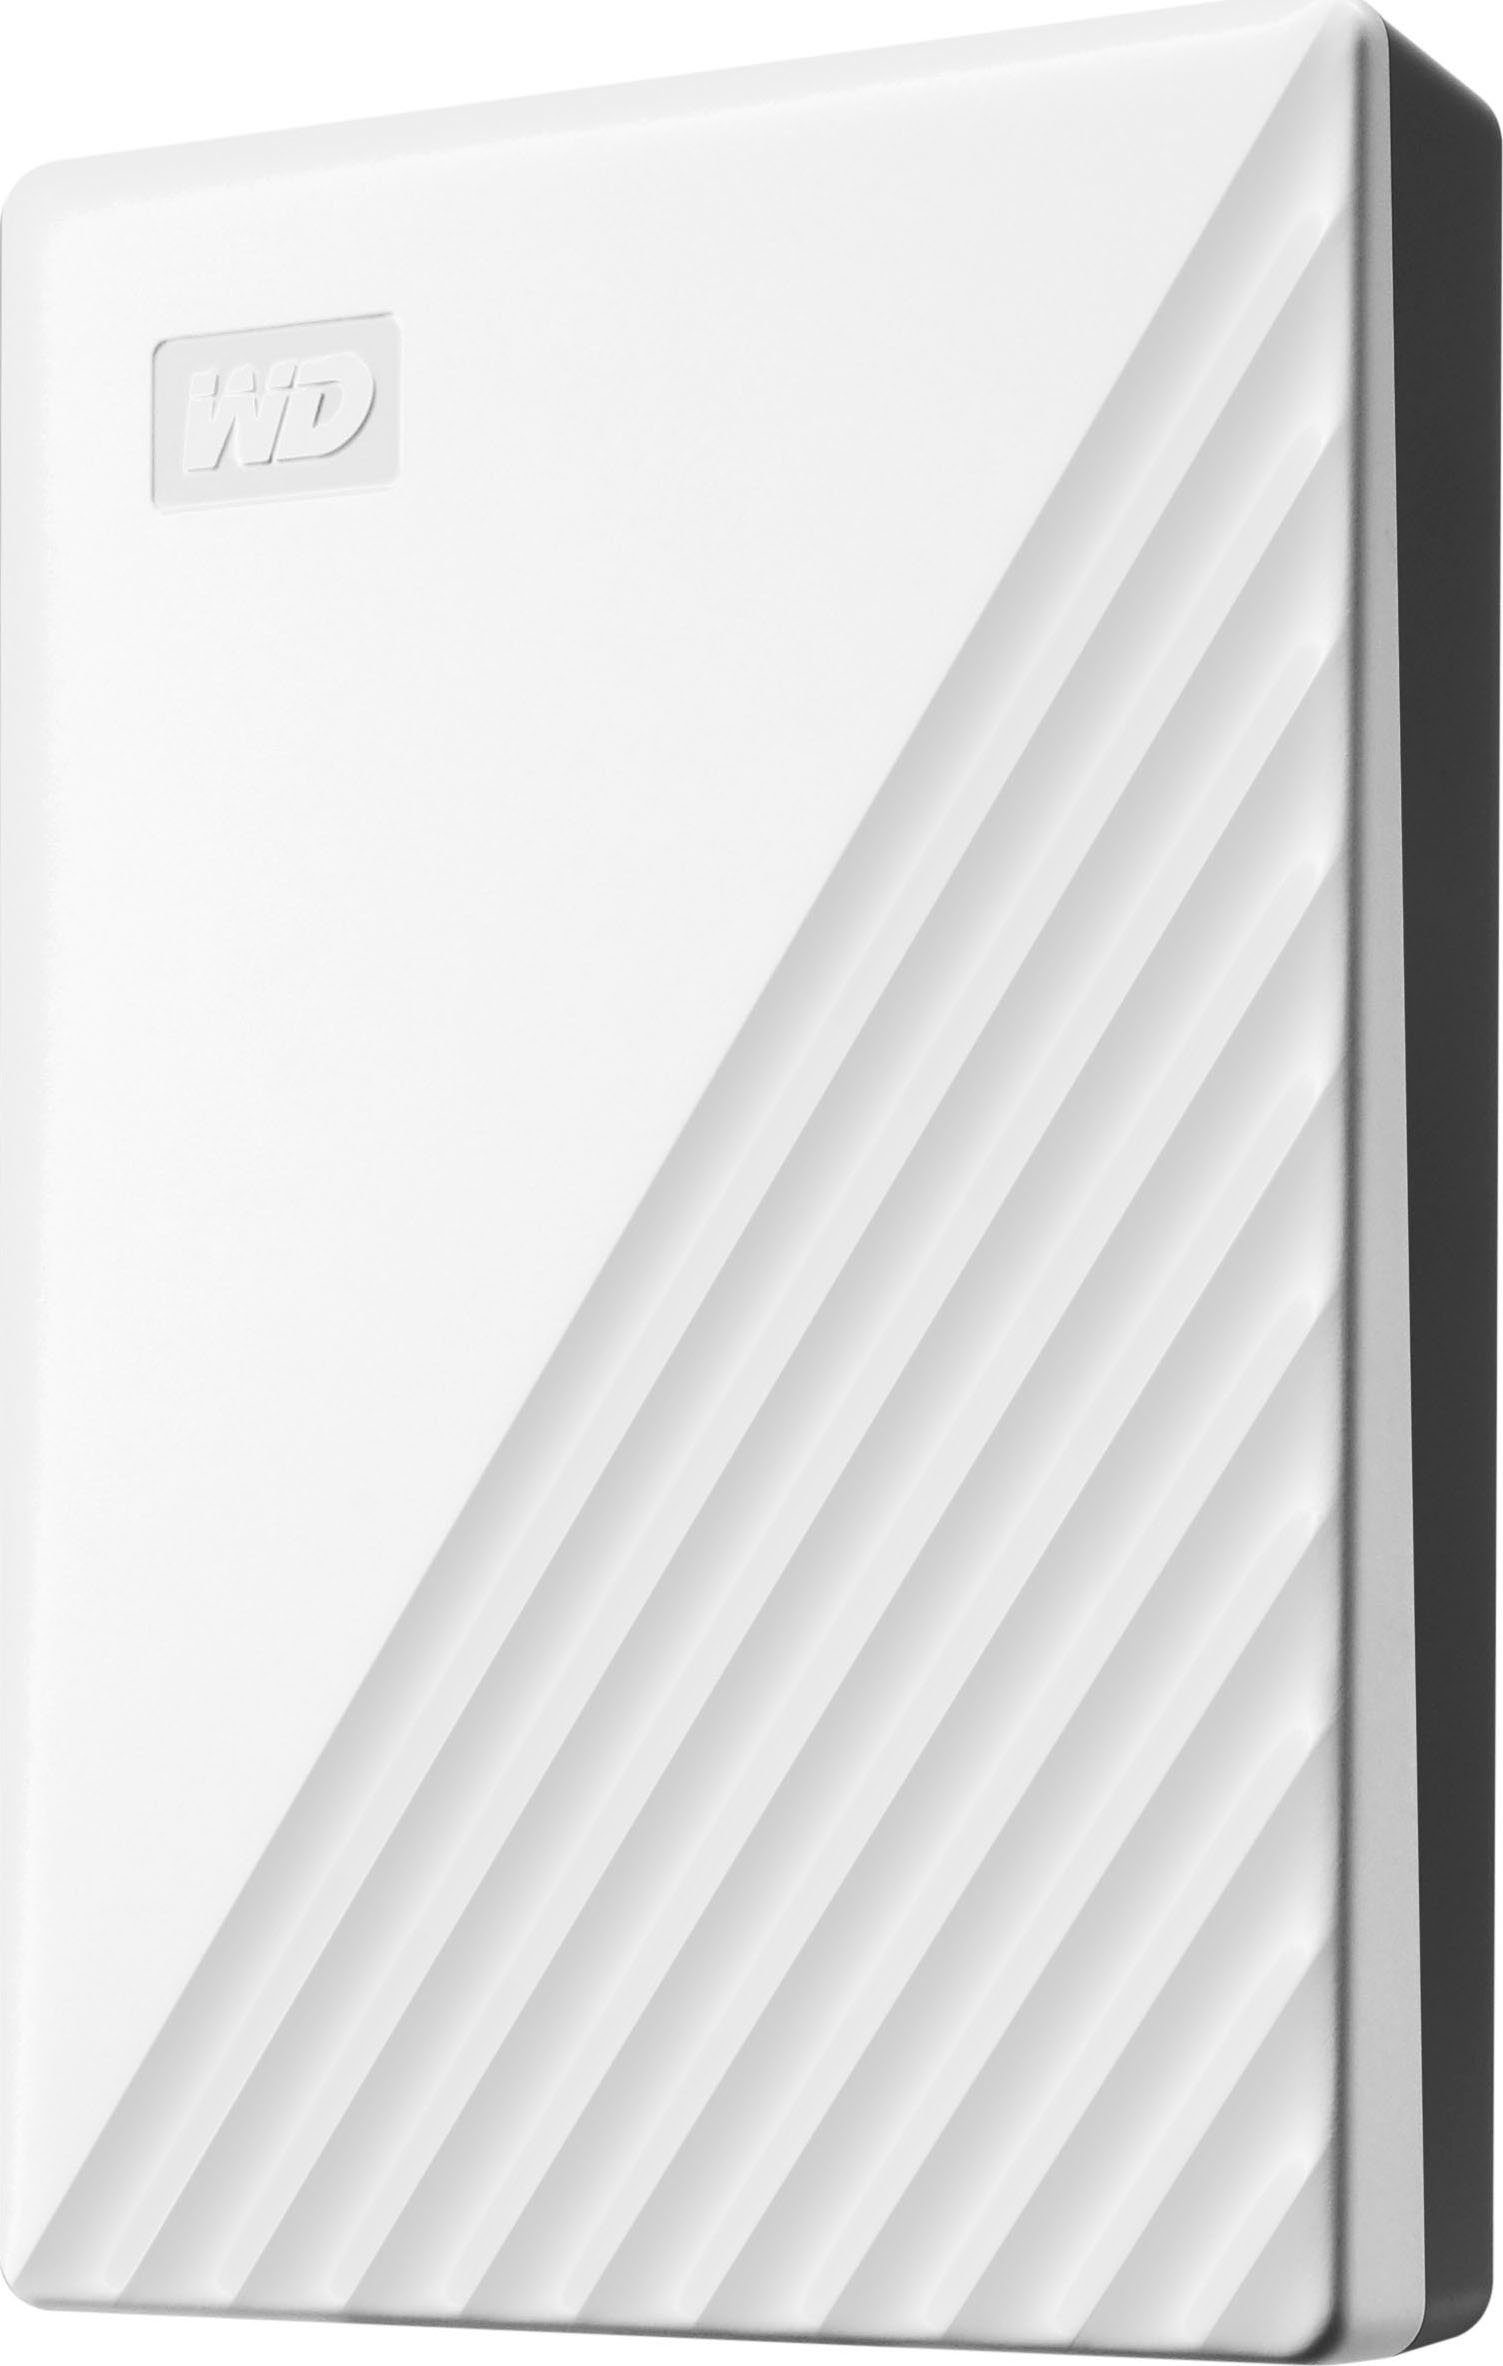 (5 WD Edition HDD-Festplatte TB) White 2,5" Passport™ externe My